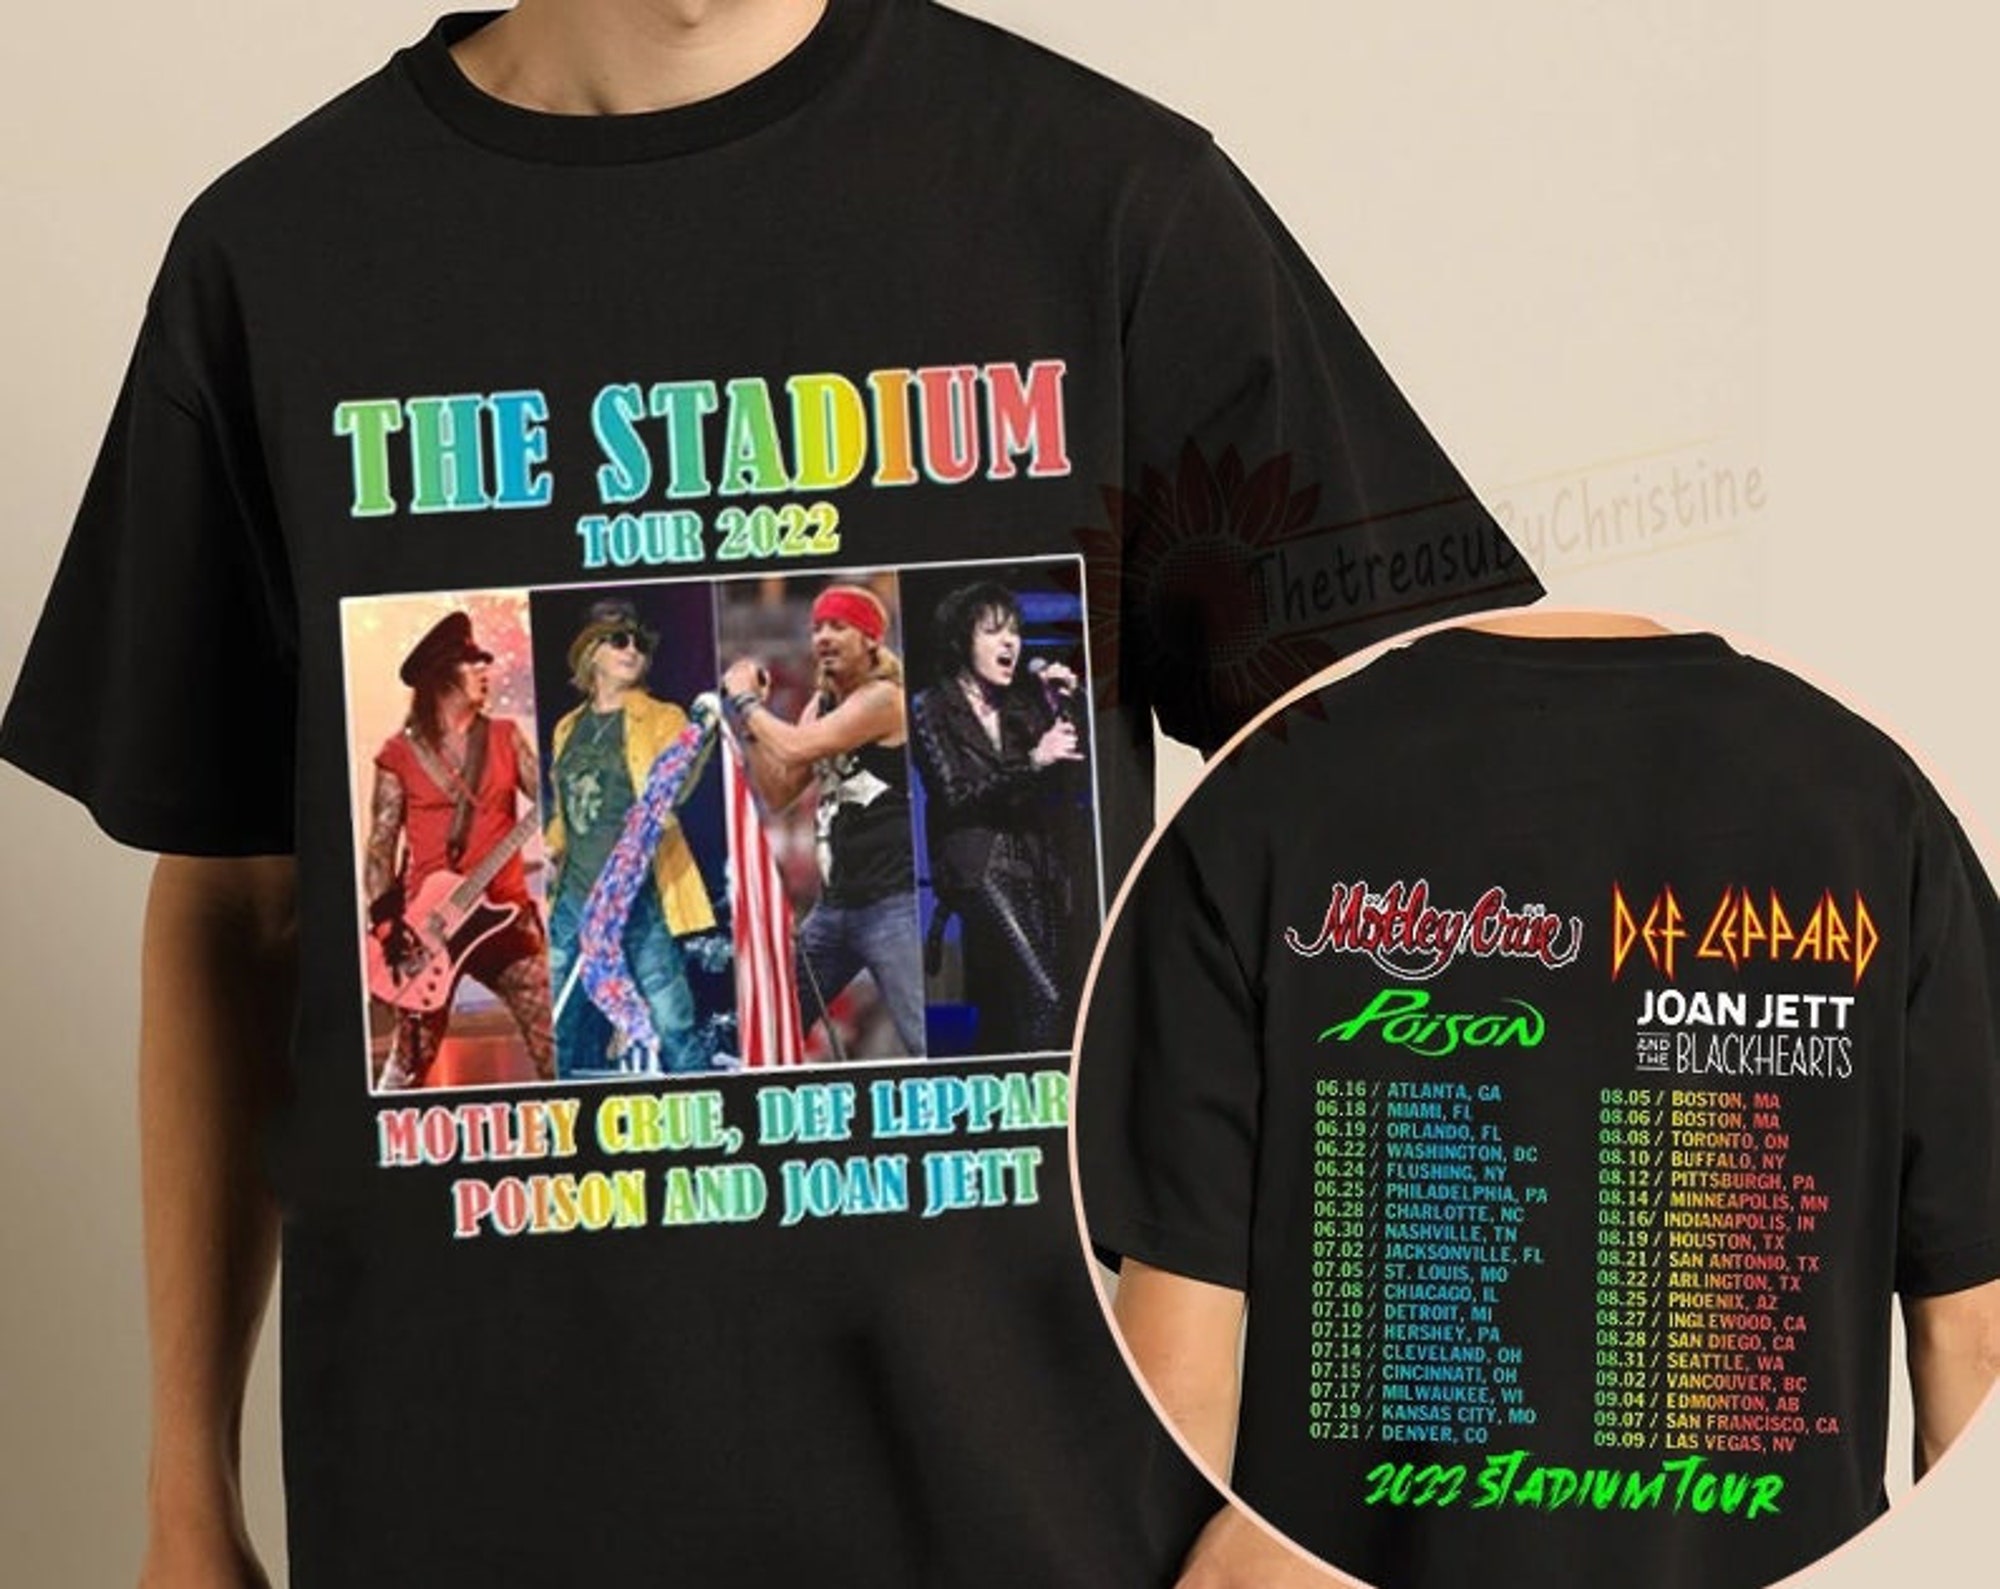 Discover The Stadium Tour Motley Crue Def Leppard Poison Joan Jett & The Blackhearts Shirt, Motley Crue Shirt